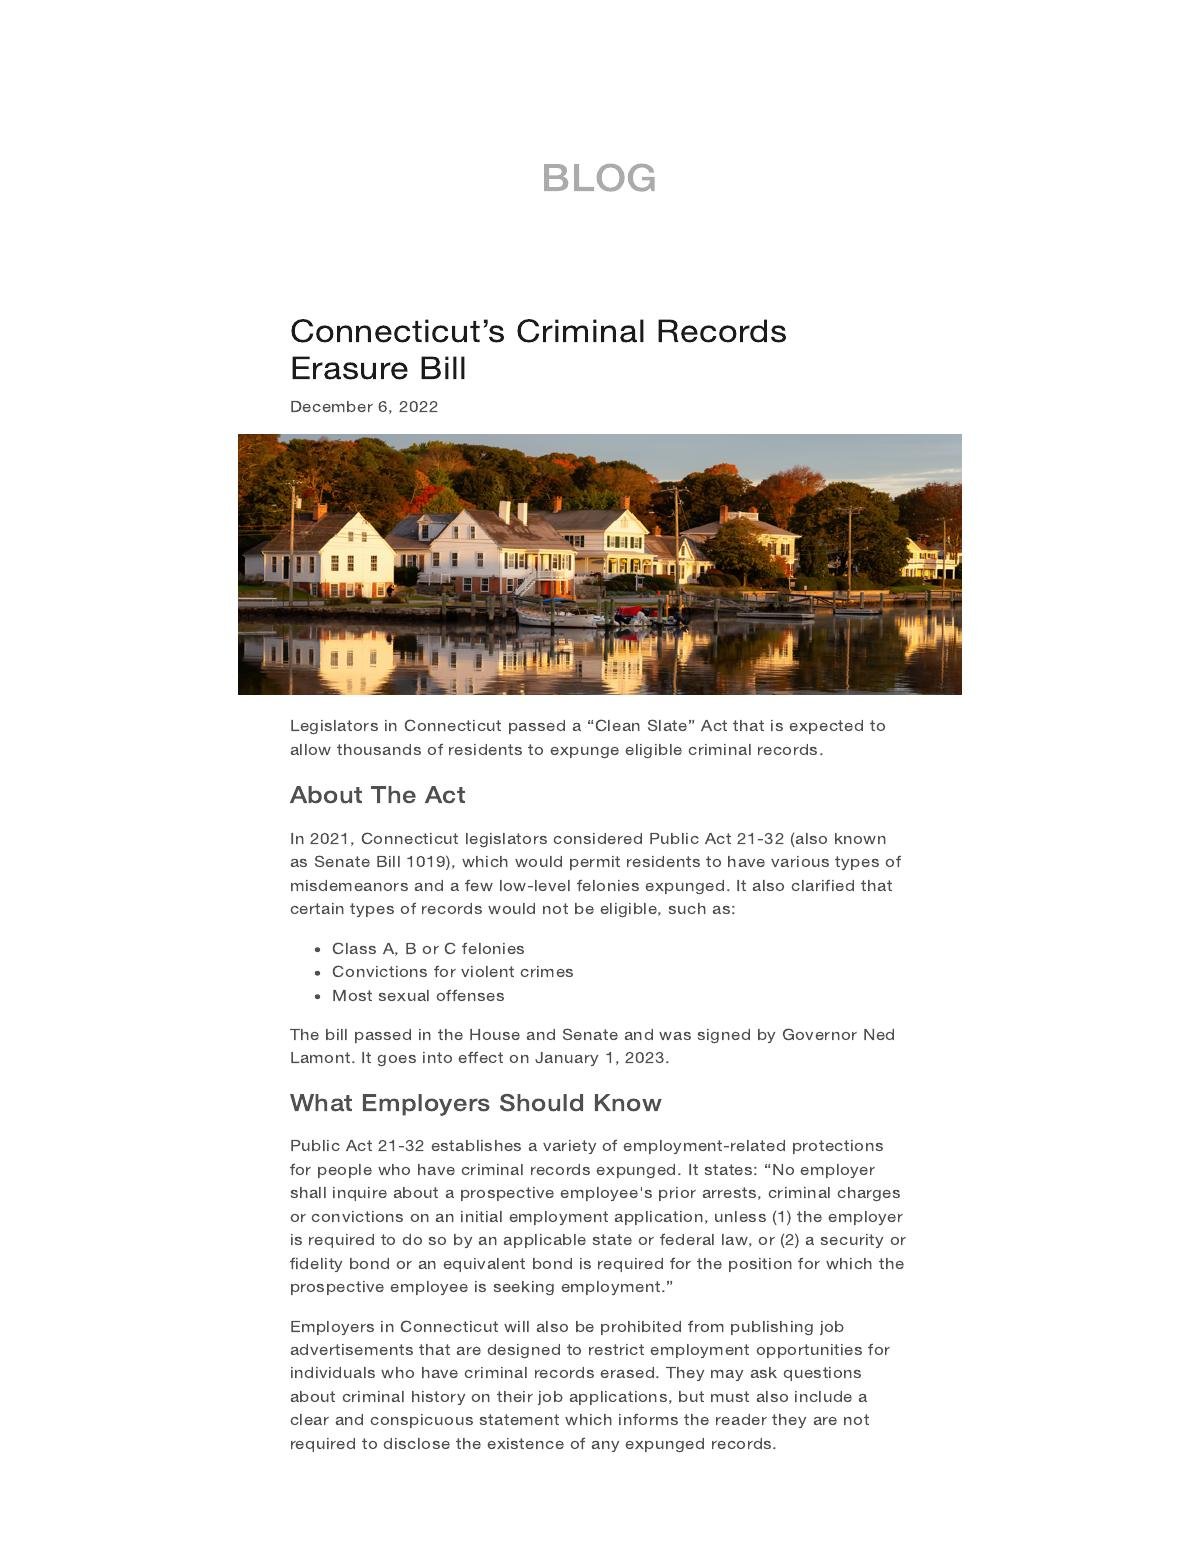 Connecticut’s Criminal Records Erasure Bill - Backgrounds Online BLOG